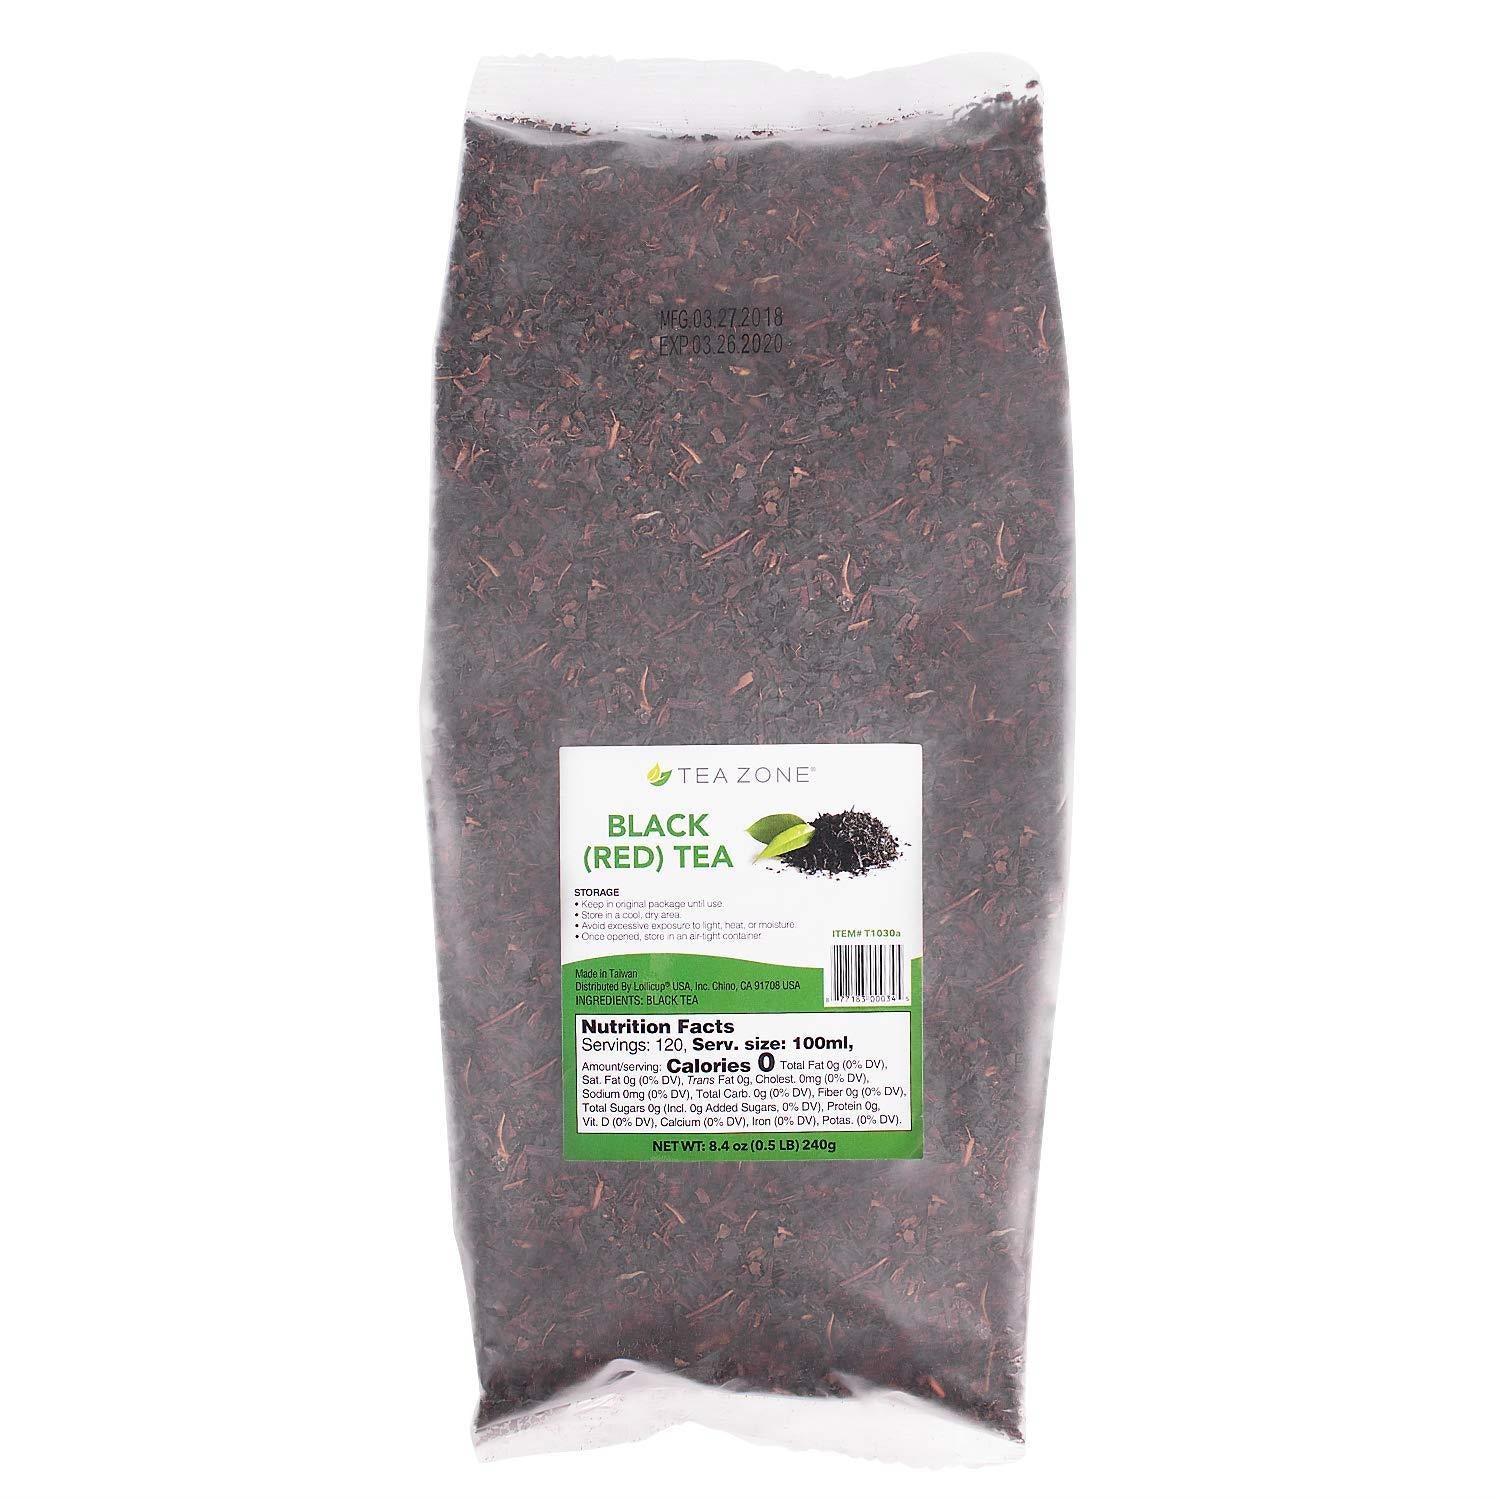 Tea Zone Tea Zone Black (Red) Tea - Bag 8.5oz bag